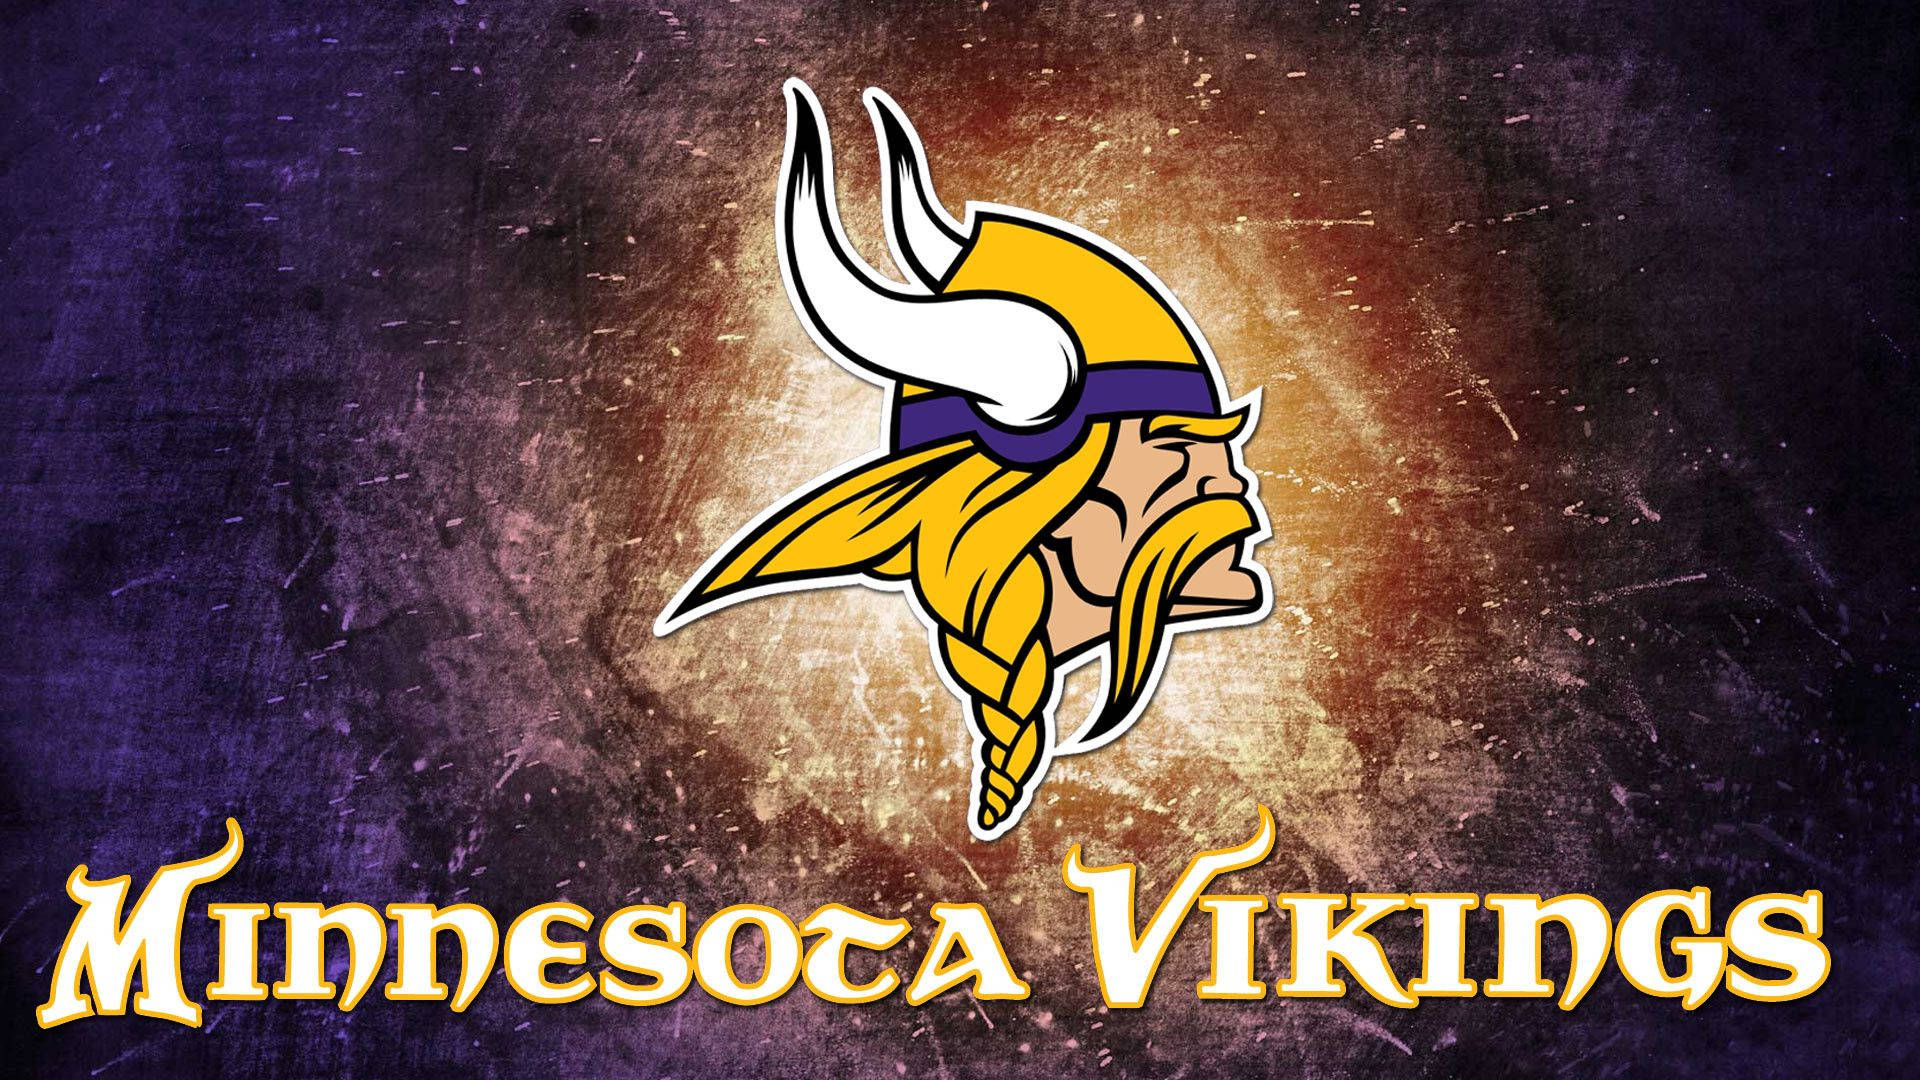 Minnesota Vikings Primary Logo Background